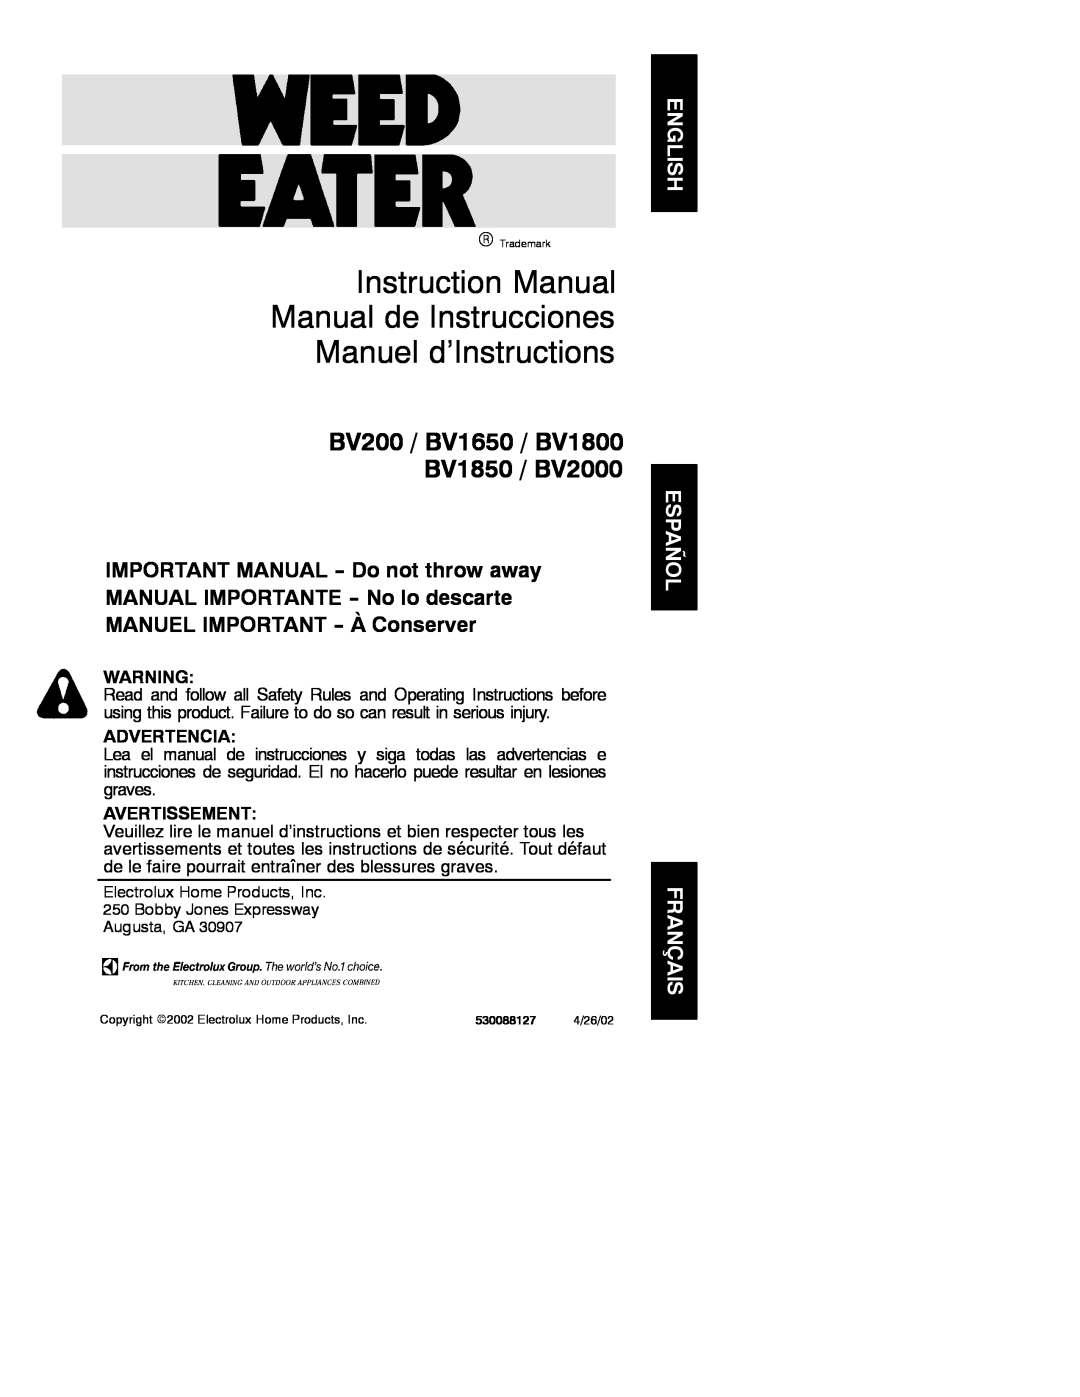 Weed Eater 530088127 instruction manual Instruction Manual Manual de Instrucciones Manuel d’Instructions, Advertencia 